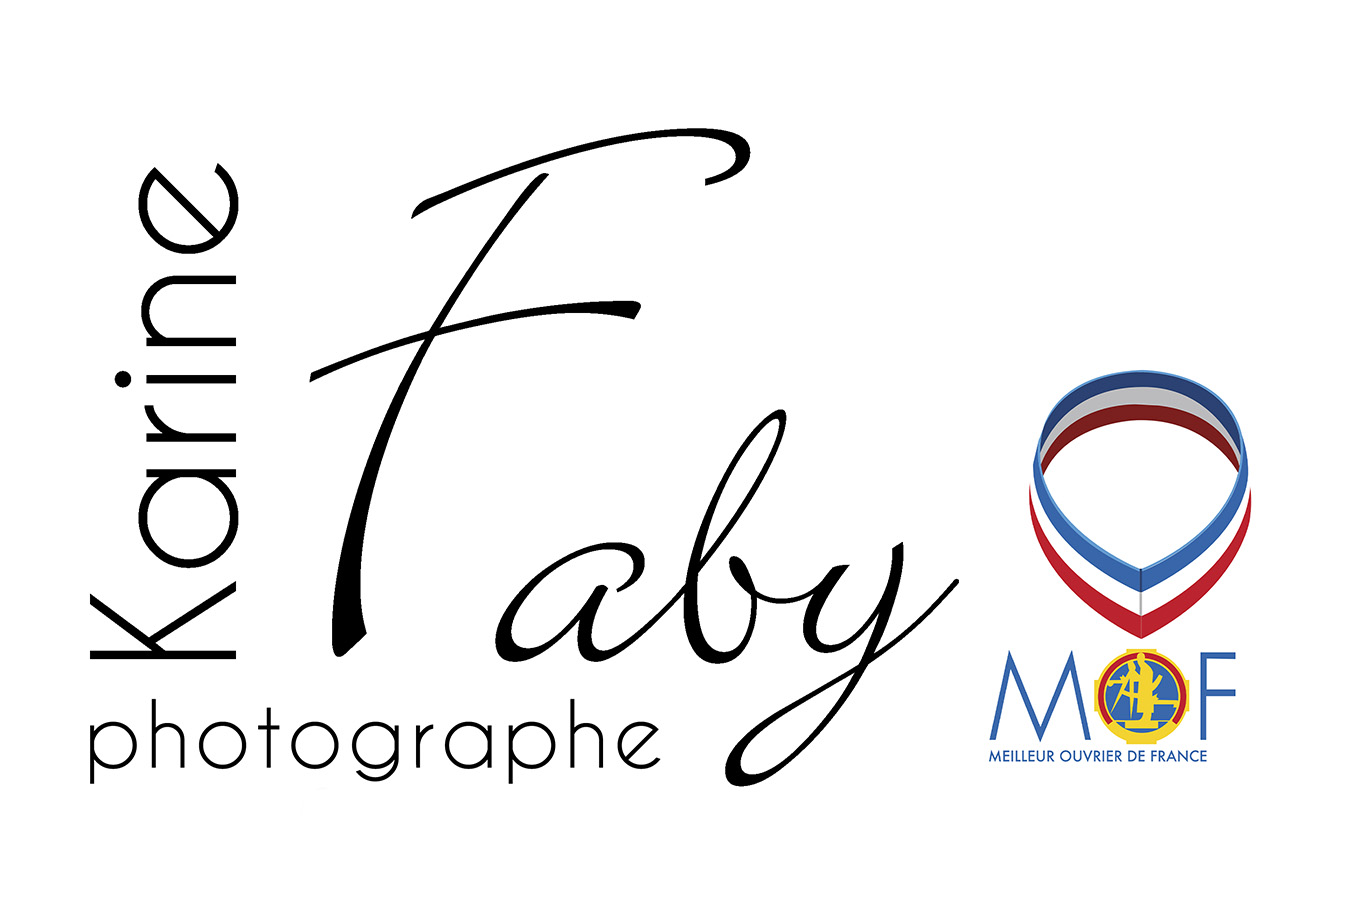 Karine Faby photographe logo